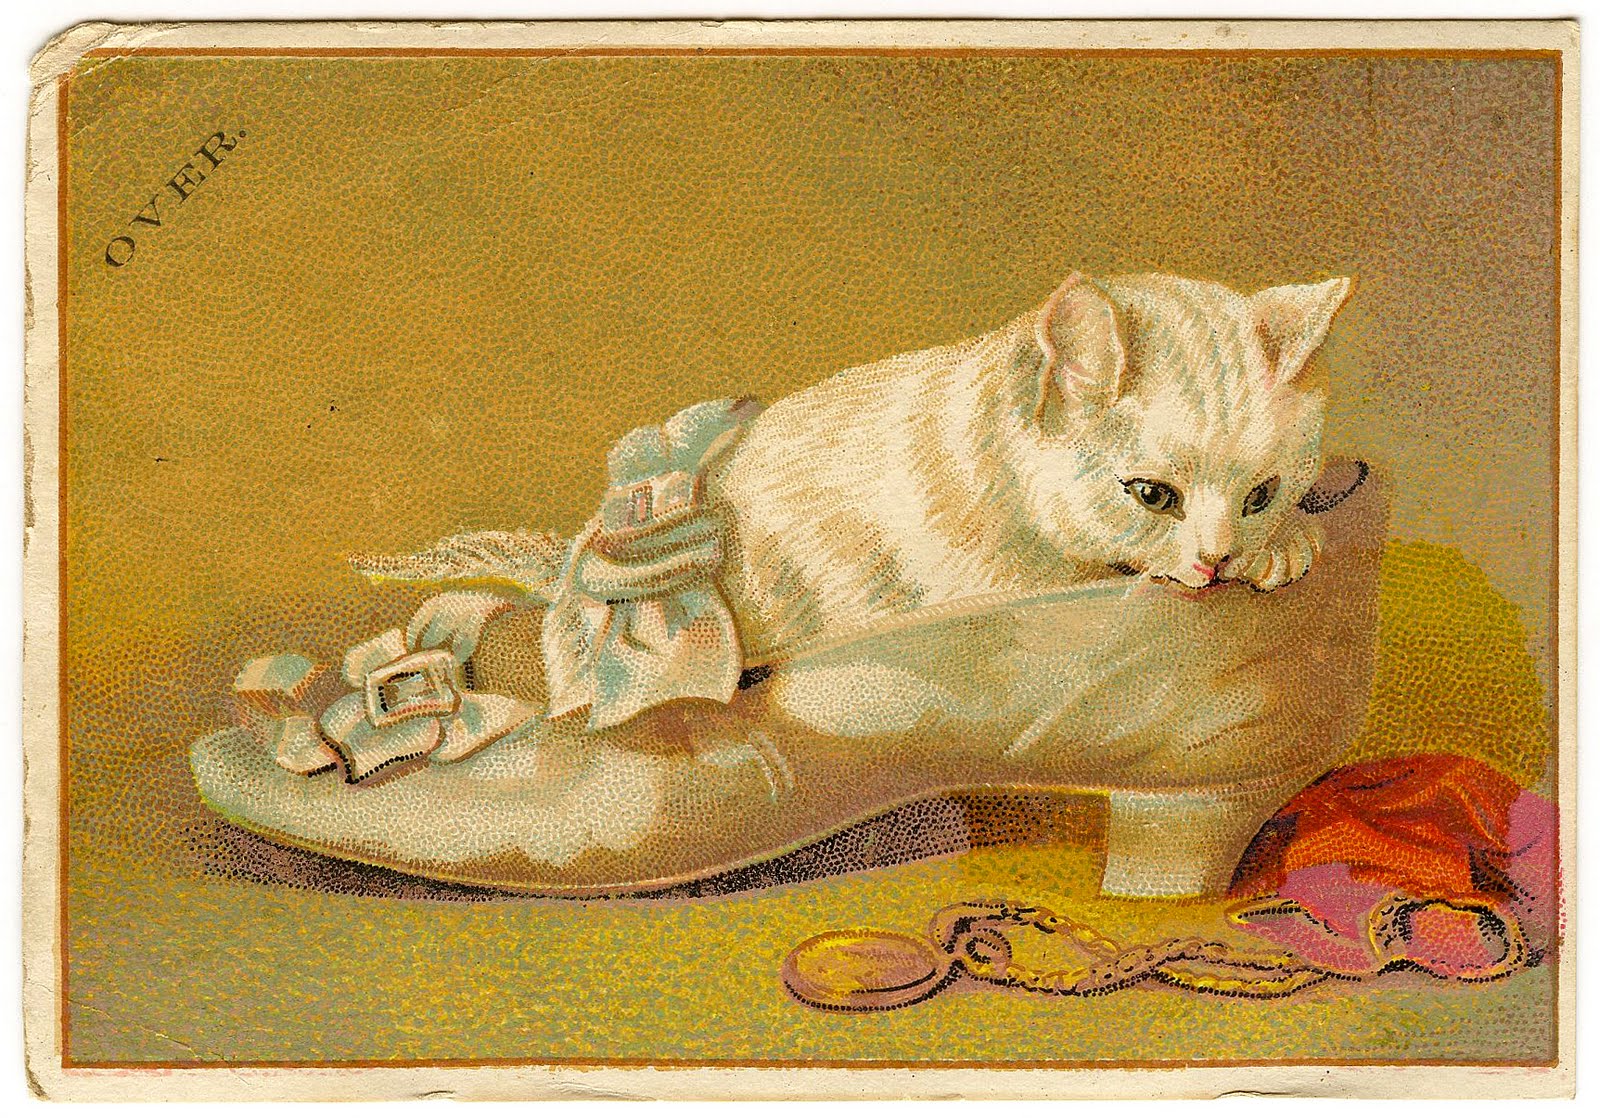 Vintage Clip Art - Kitten in Slipper - Ephemera - The Graphics Fairy